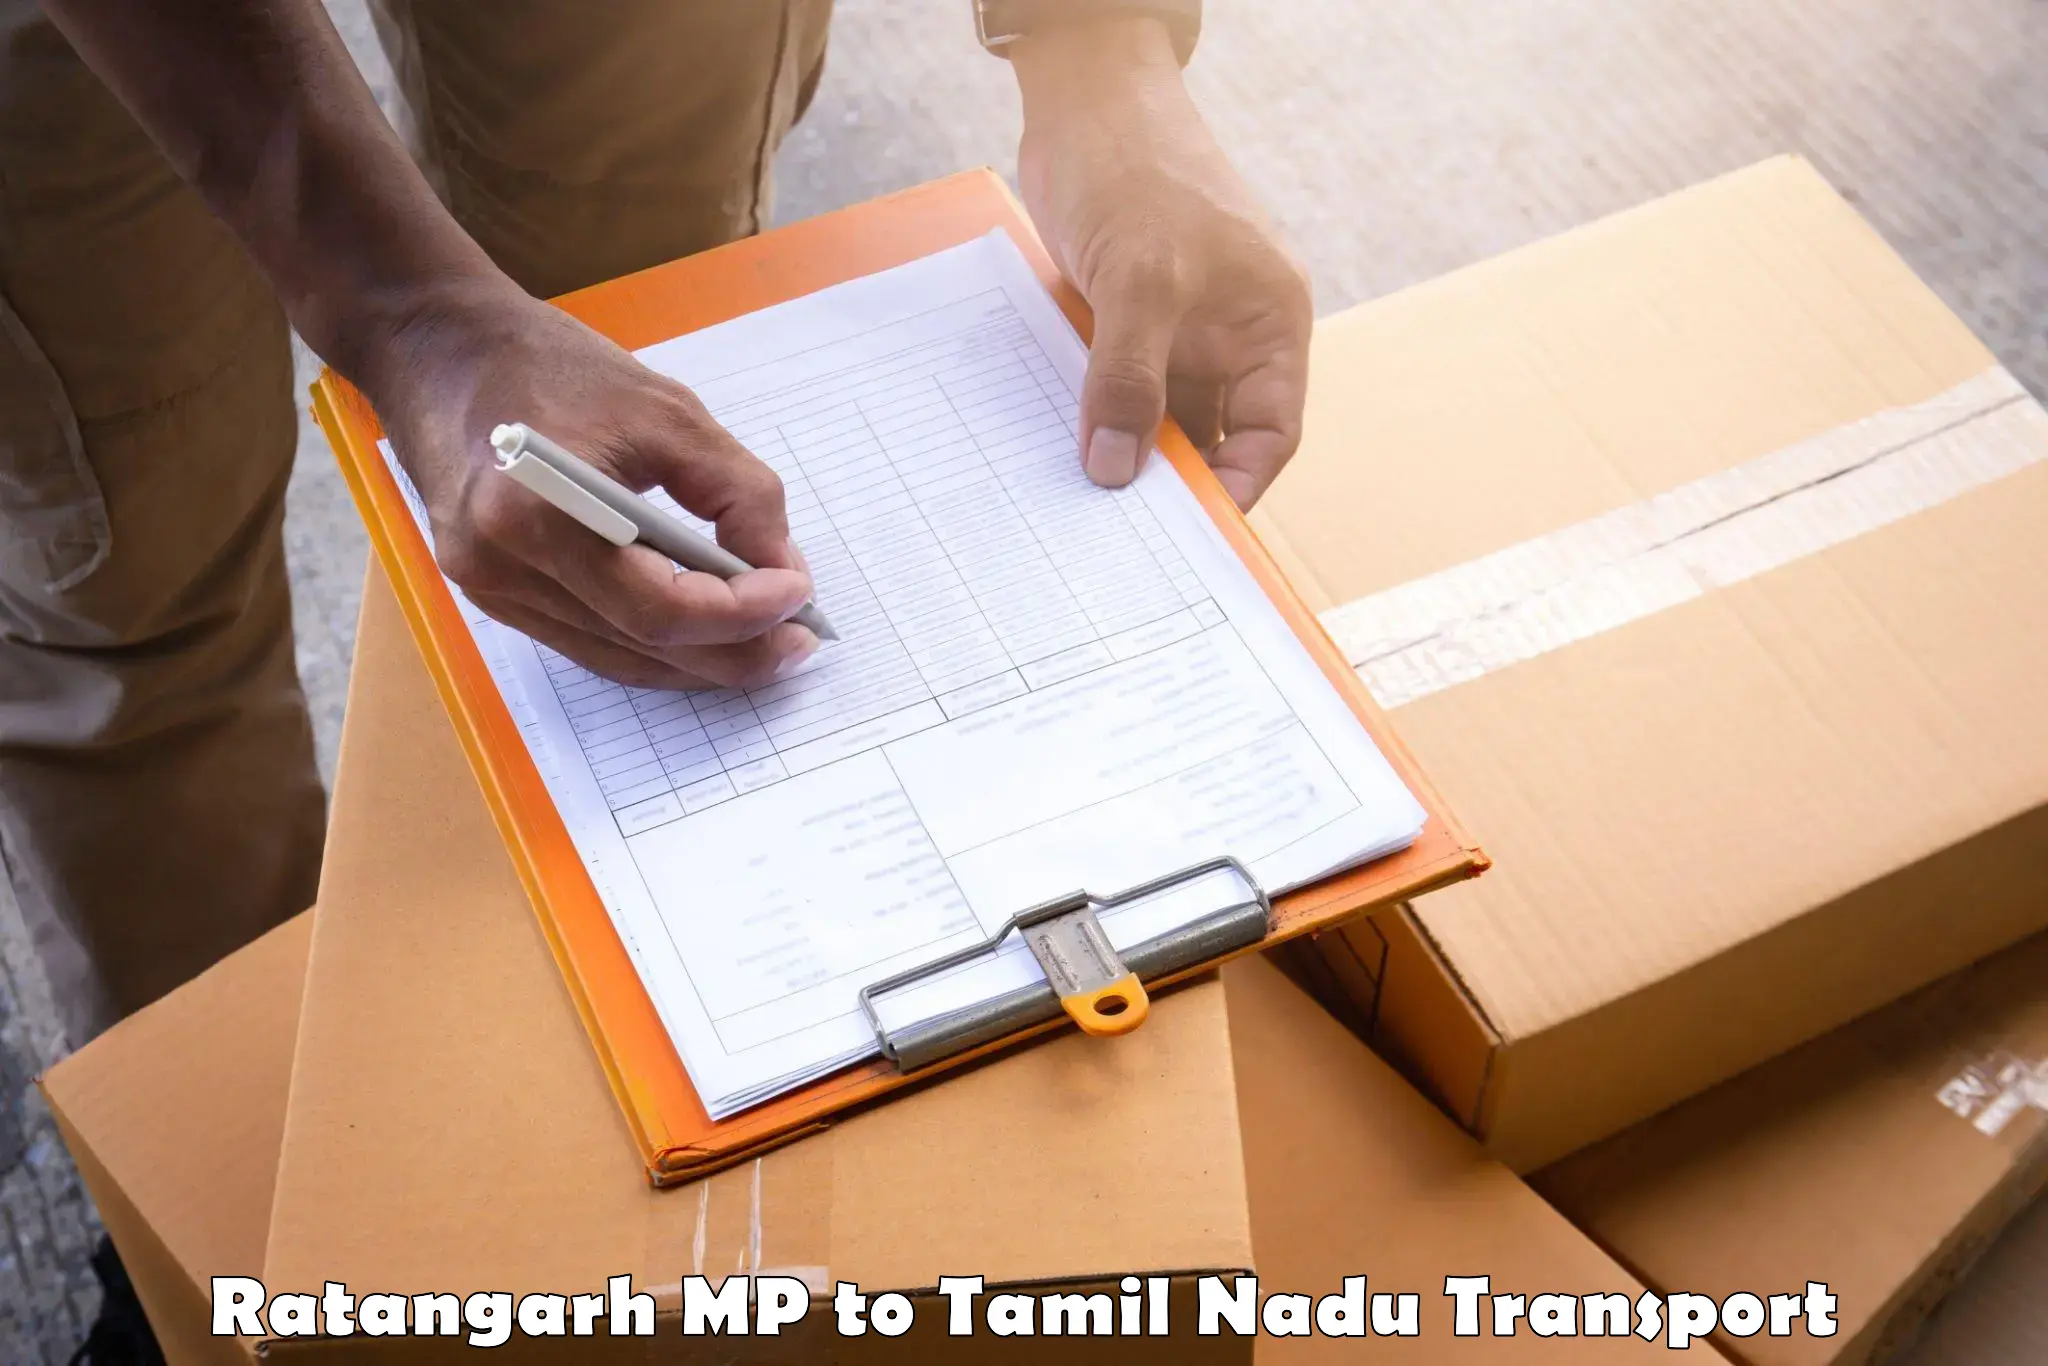 Logistics transportation services Ratangarh MP to Cumbum